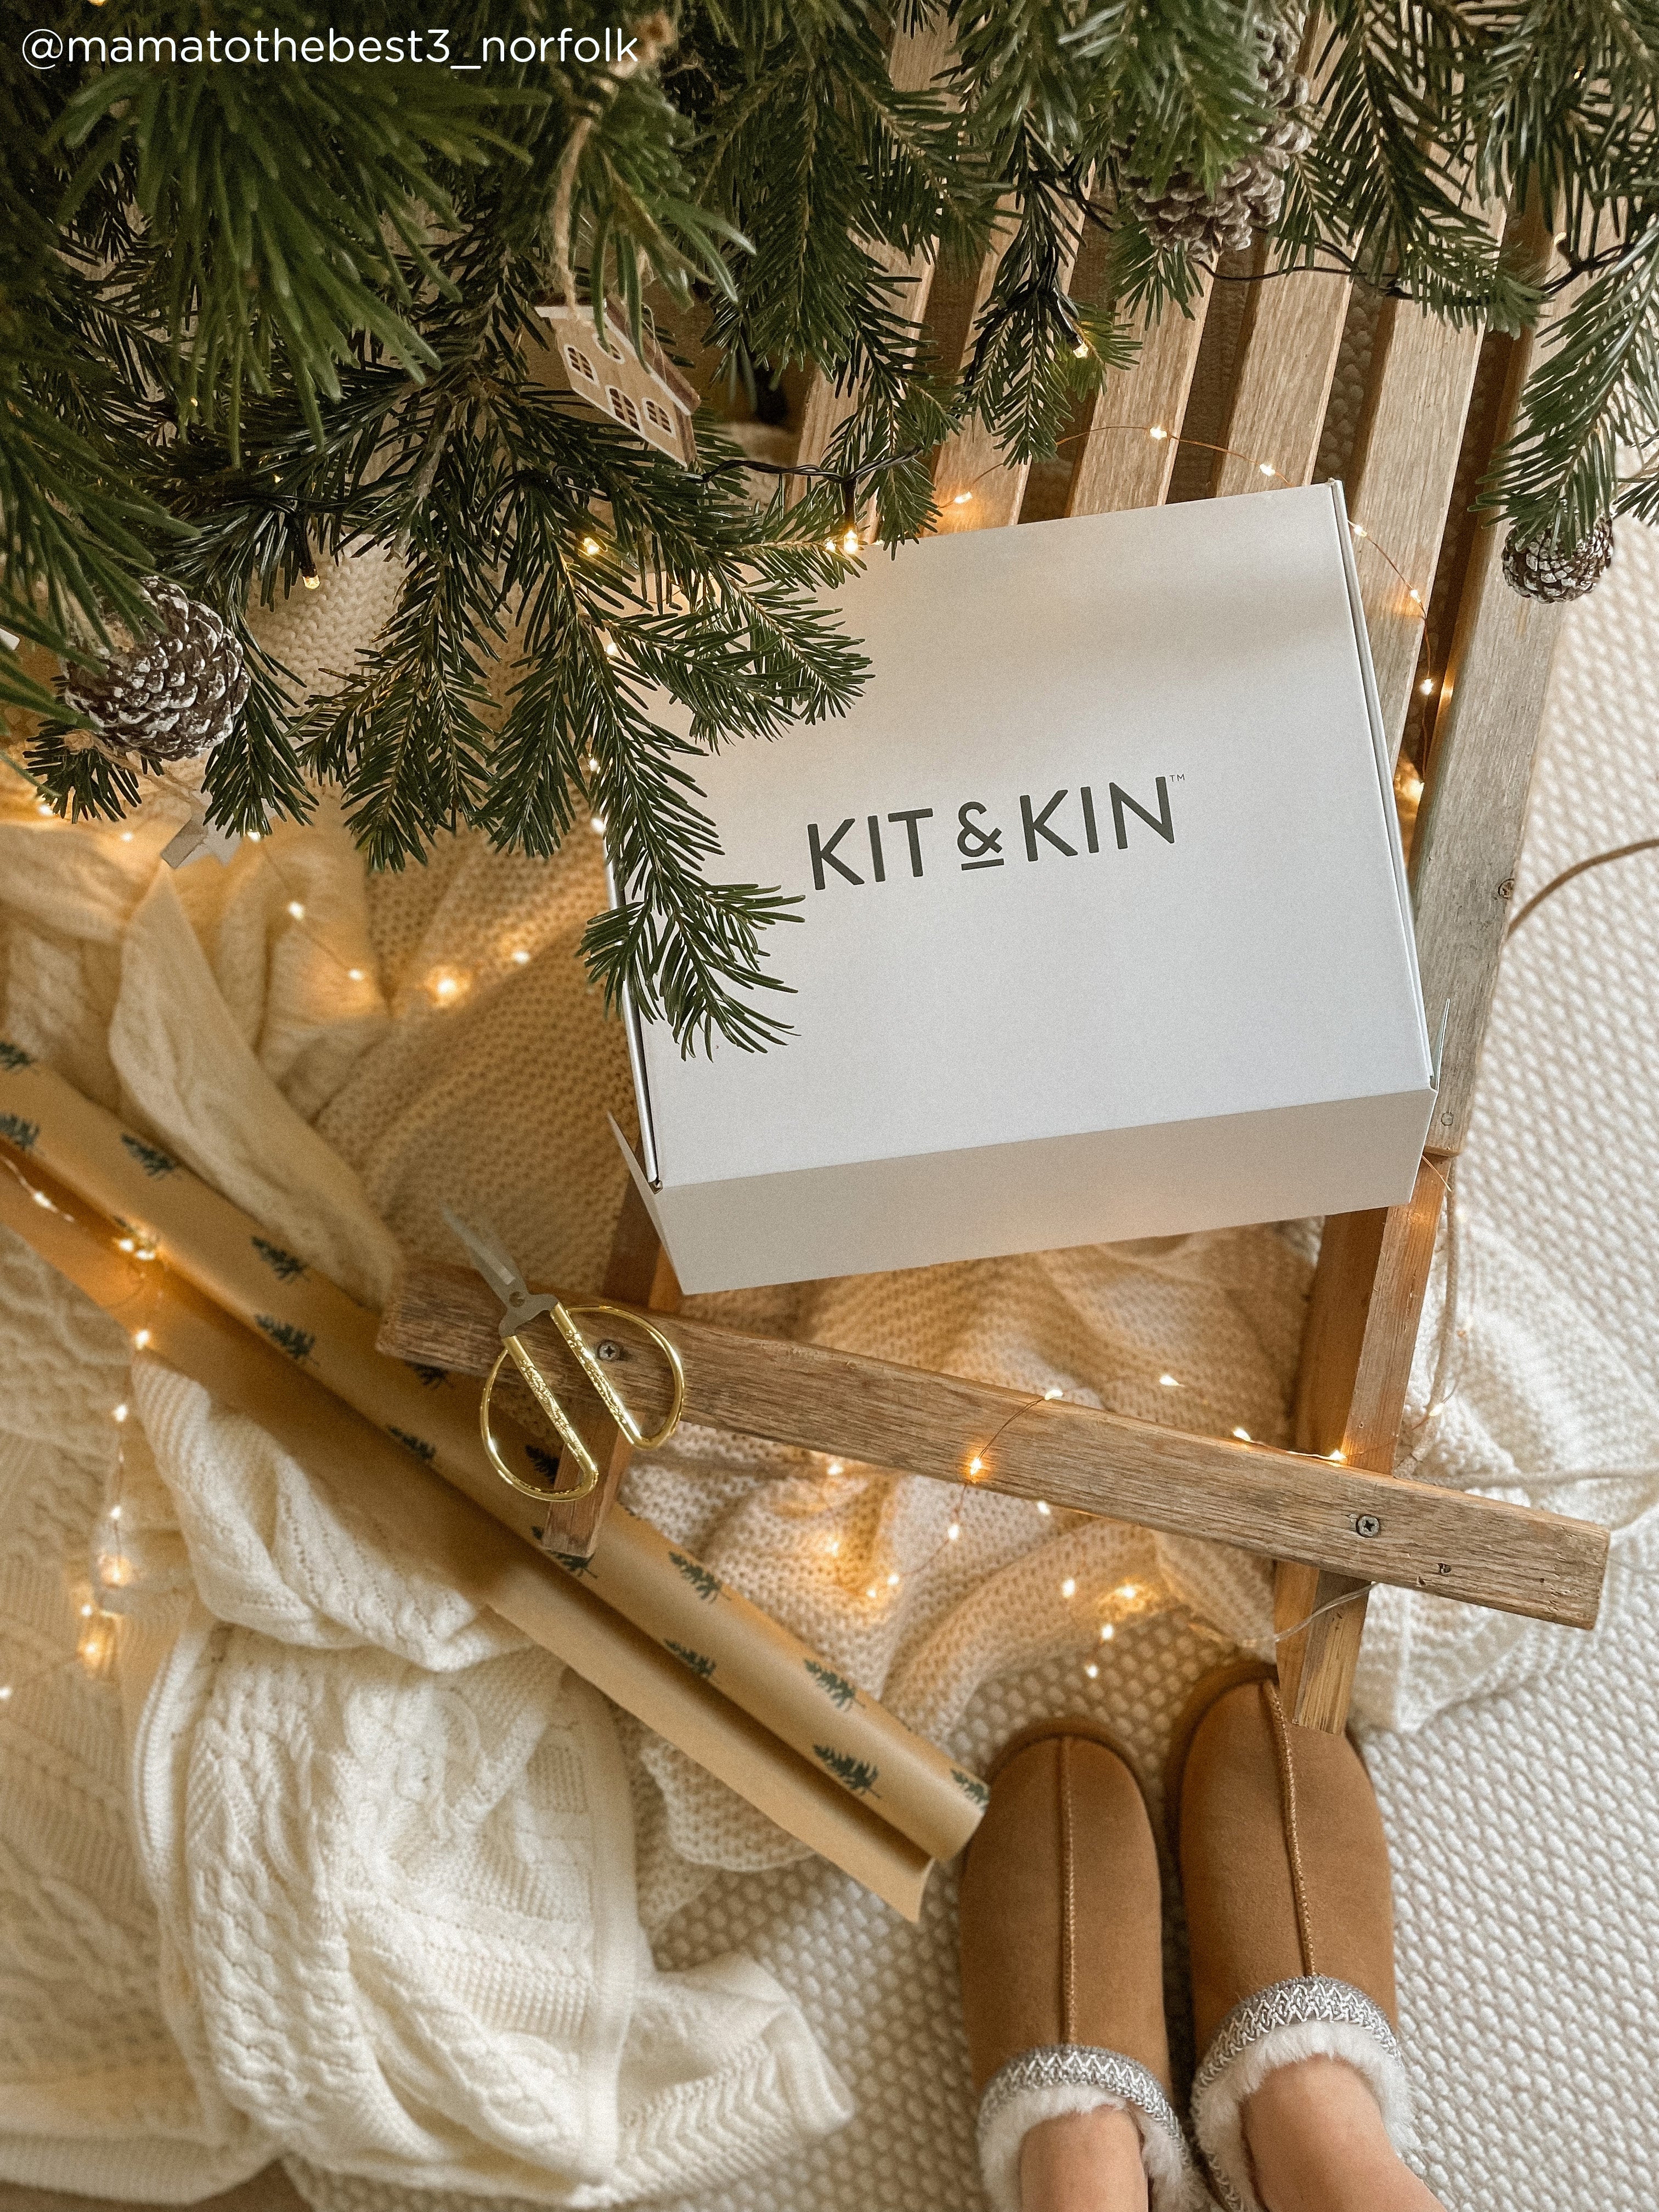 Kit & Kin gift box under Christmas tree